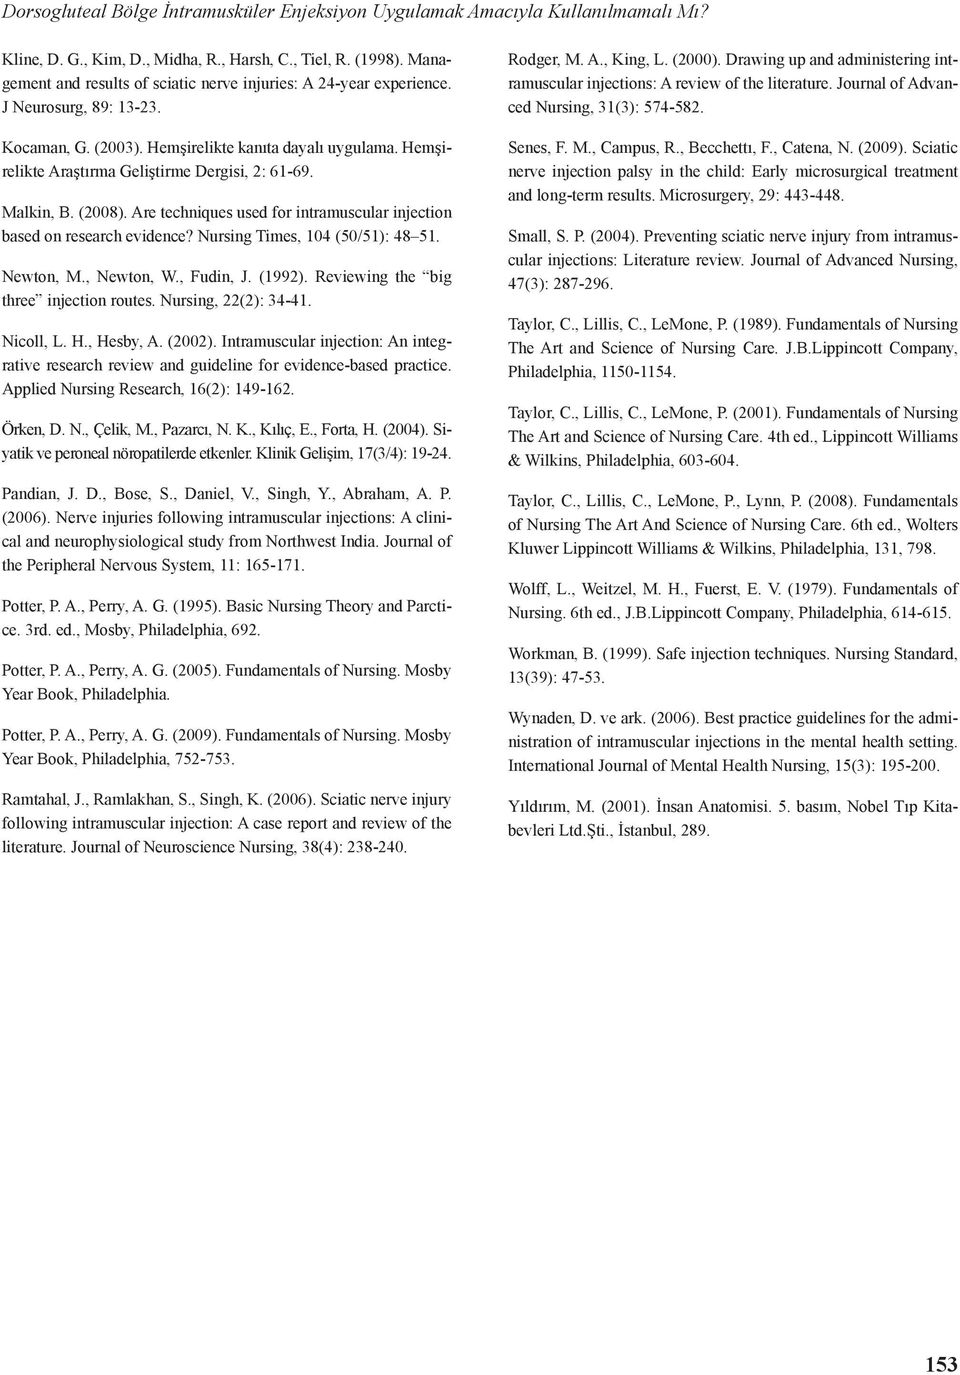 Hemşirelikte Araştırma Geliştirme Dergisi, 2: 61-69. Malkin, B. (2008). Are techniques used for intramuscular injection based on research evidence? Nursing Times, 104 (50/51): 48 51. Newton, M.